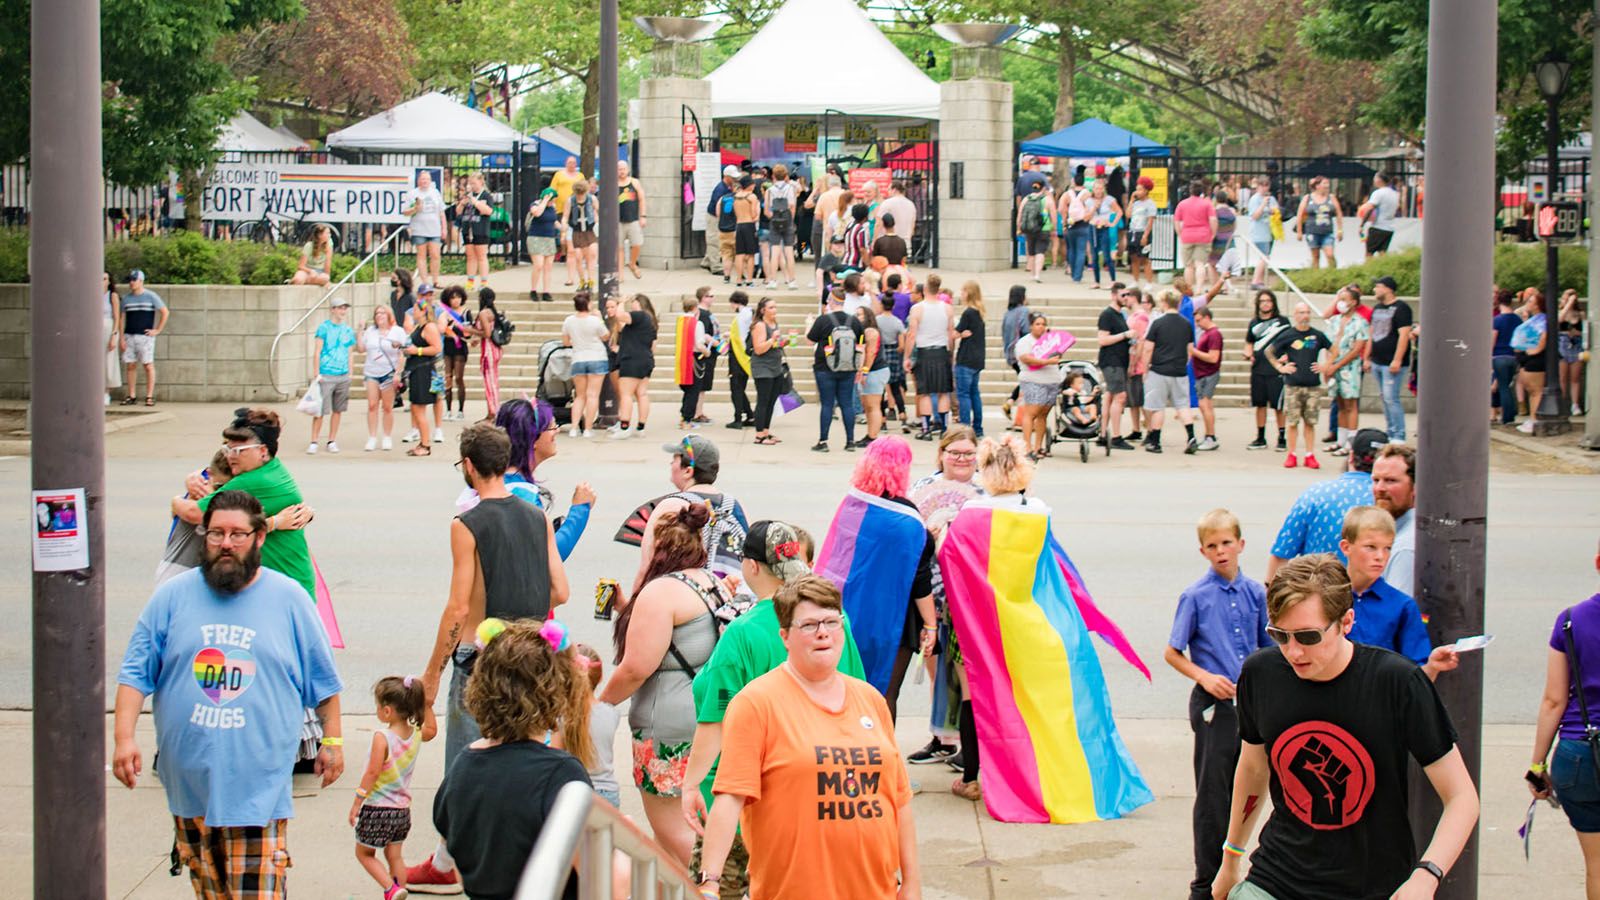 Fort Wayne Pride returns to Headwaters Park on July 22-23.